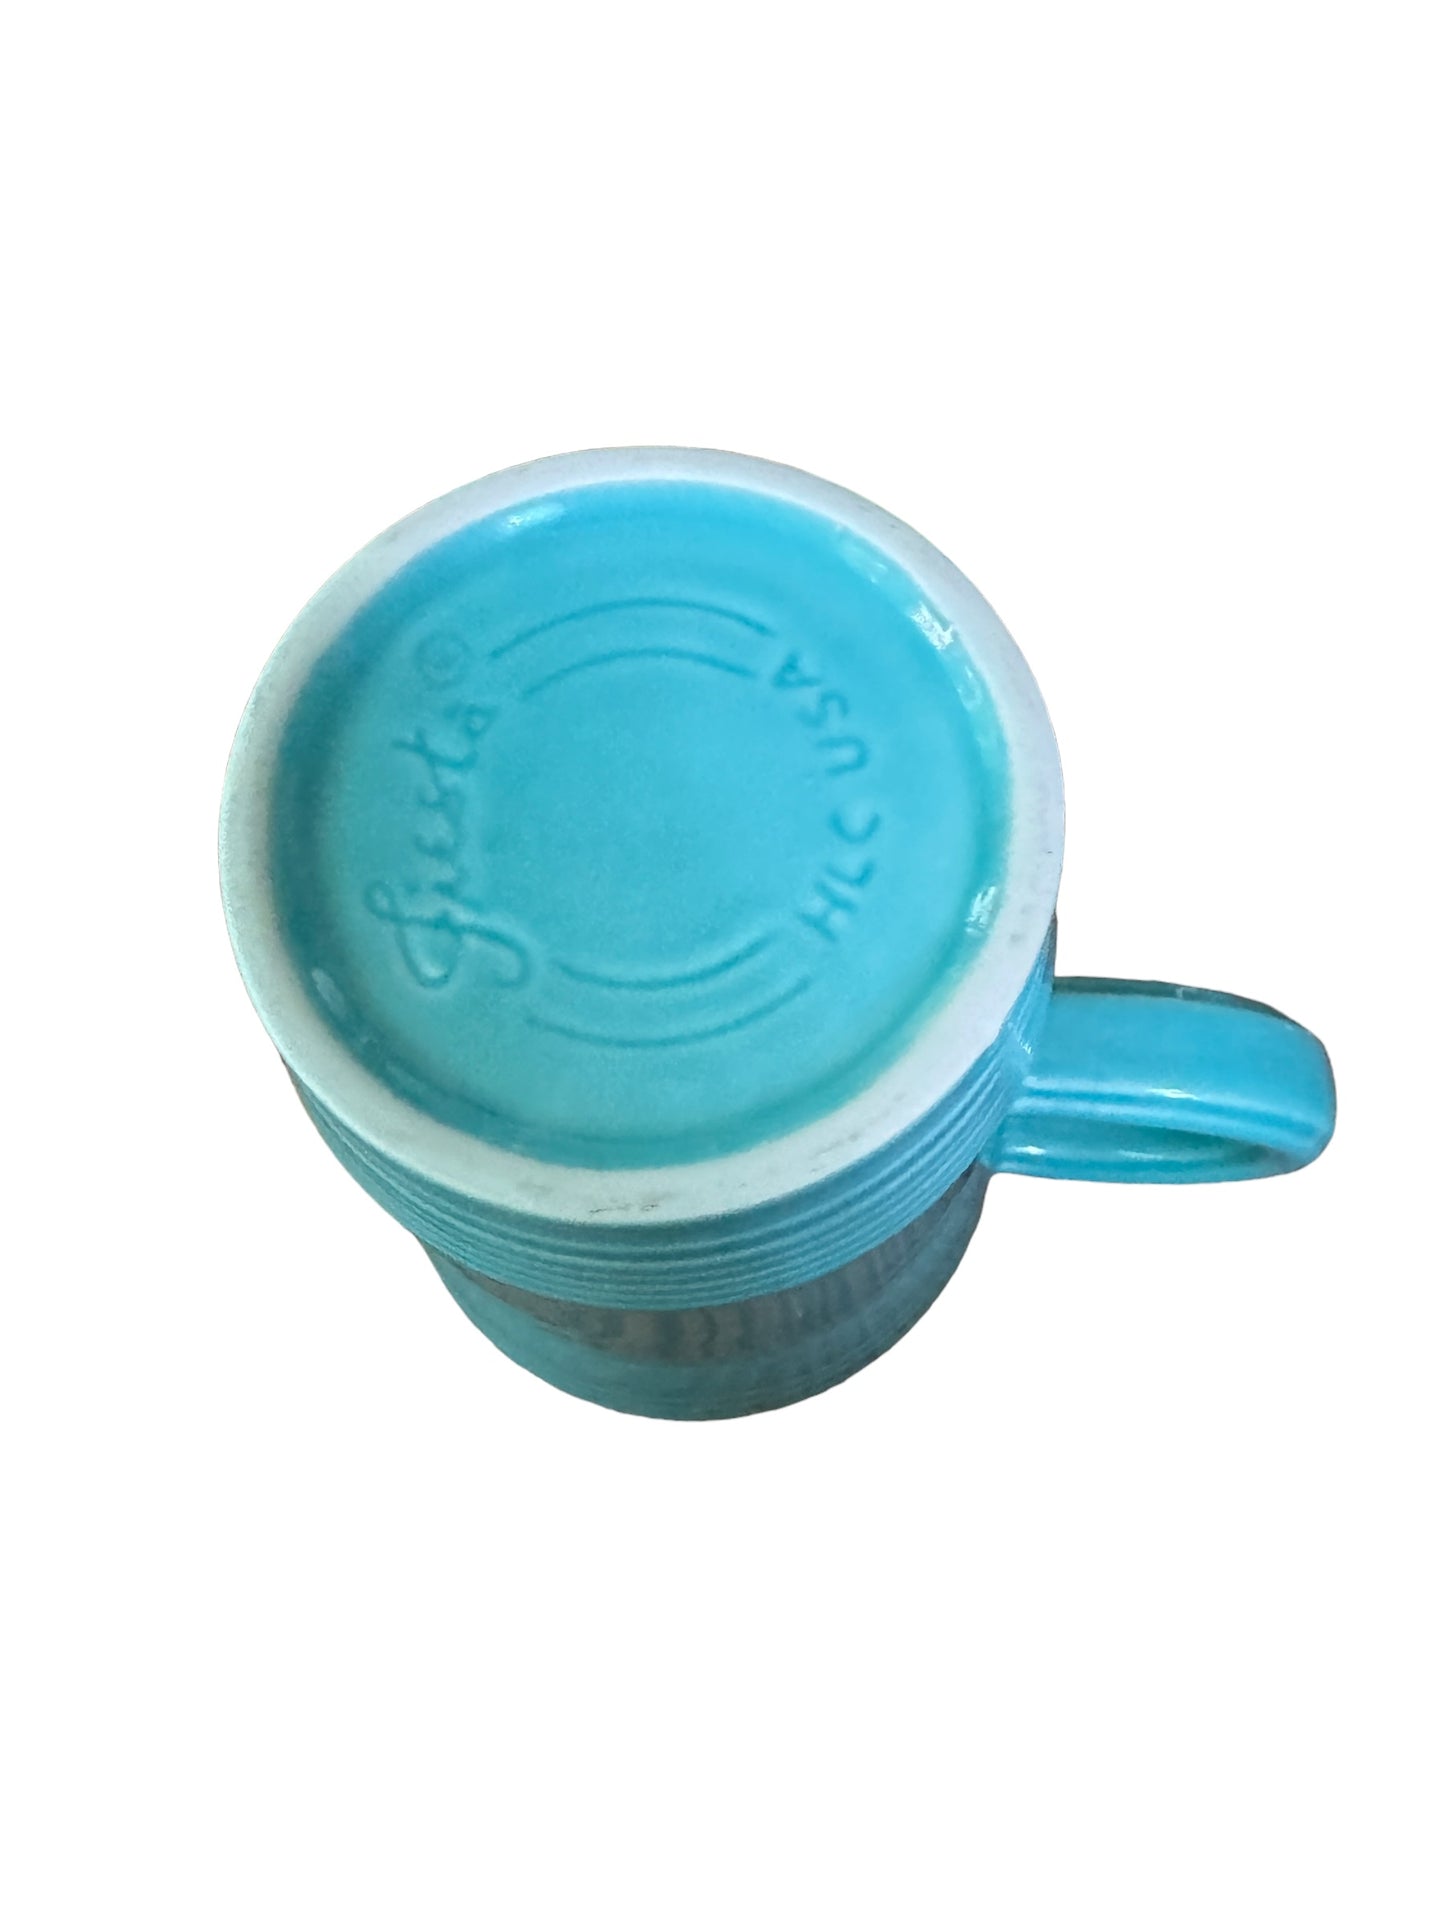 Fiesta Latte Mug in Turquoise (Kohls Exclusive)1st